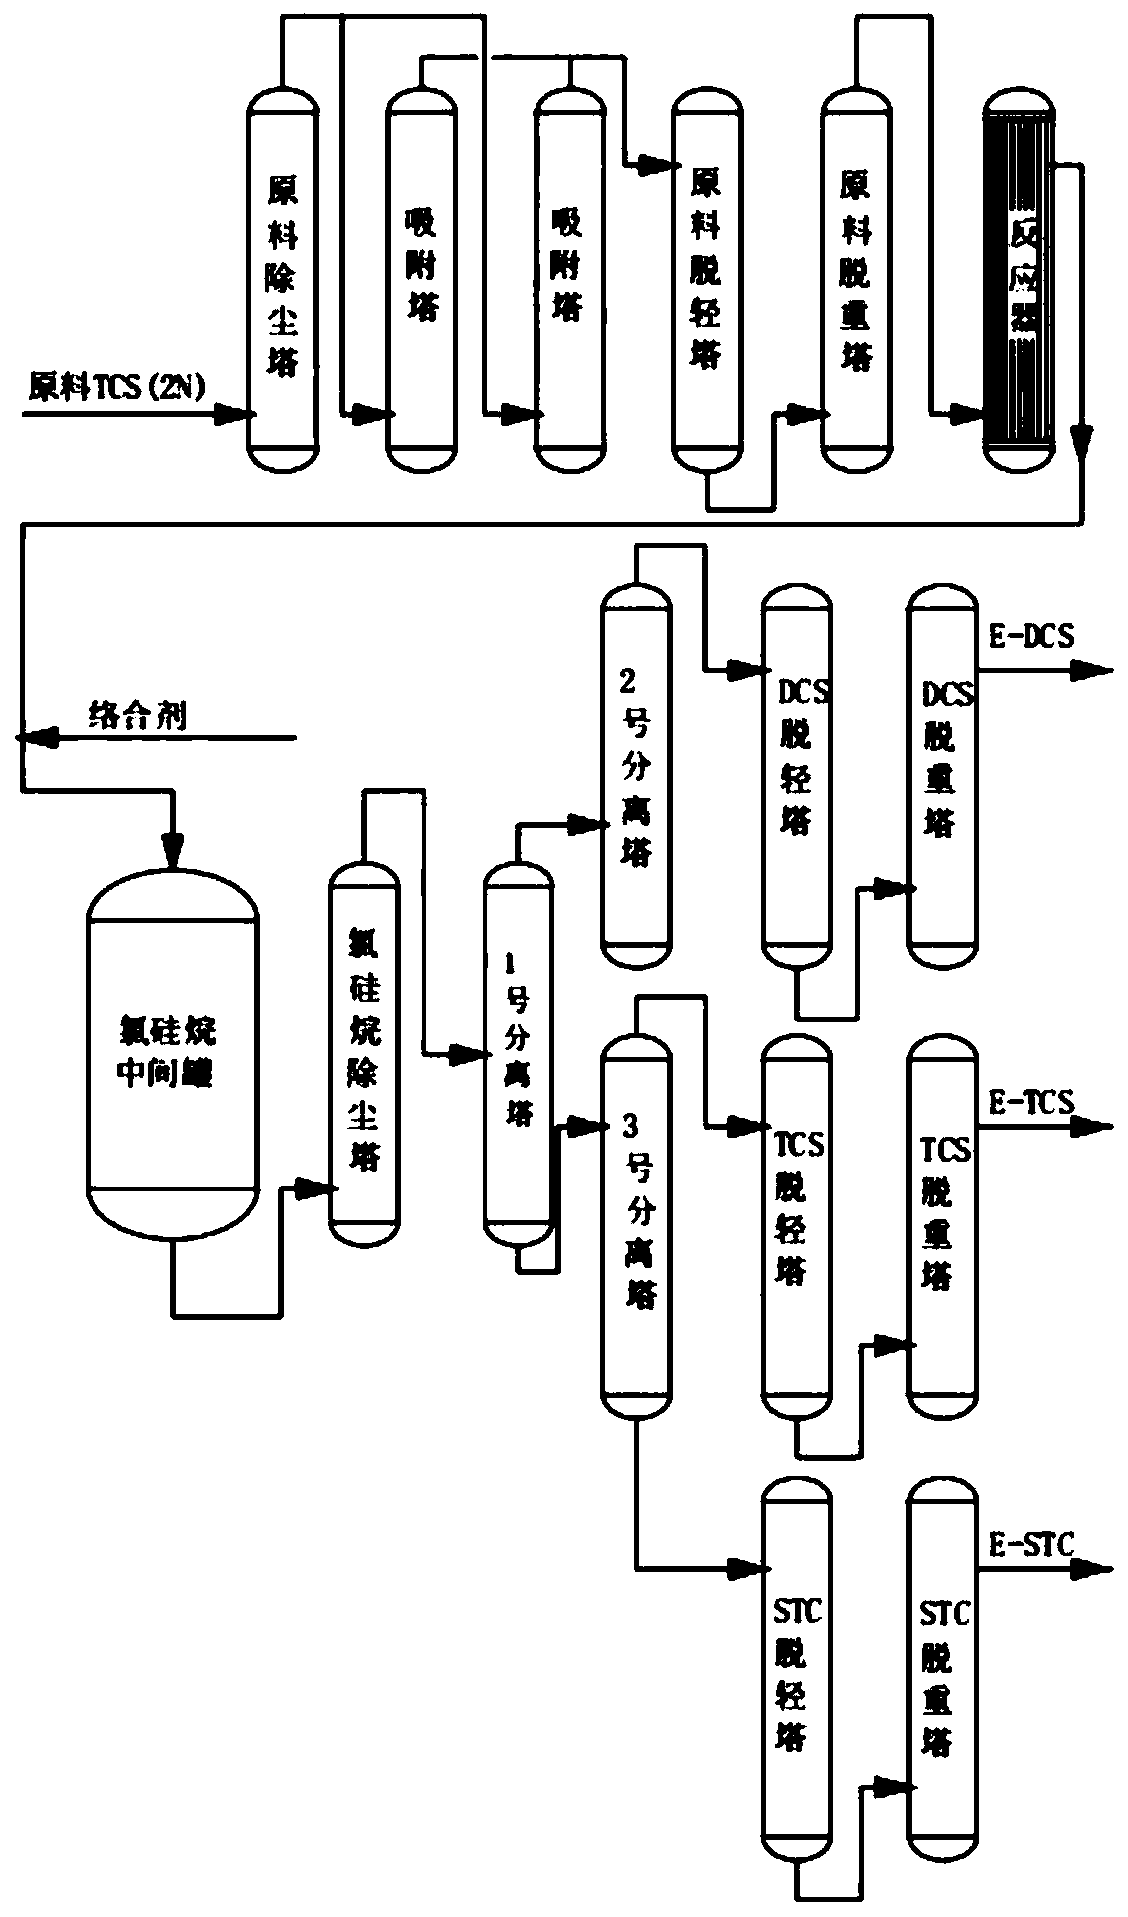 Method for simultaneously producing electronic-grade dichIorosilane, electronic-grade trichlorosilane and electronic-grade silicon tetrachloride